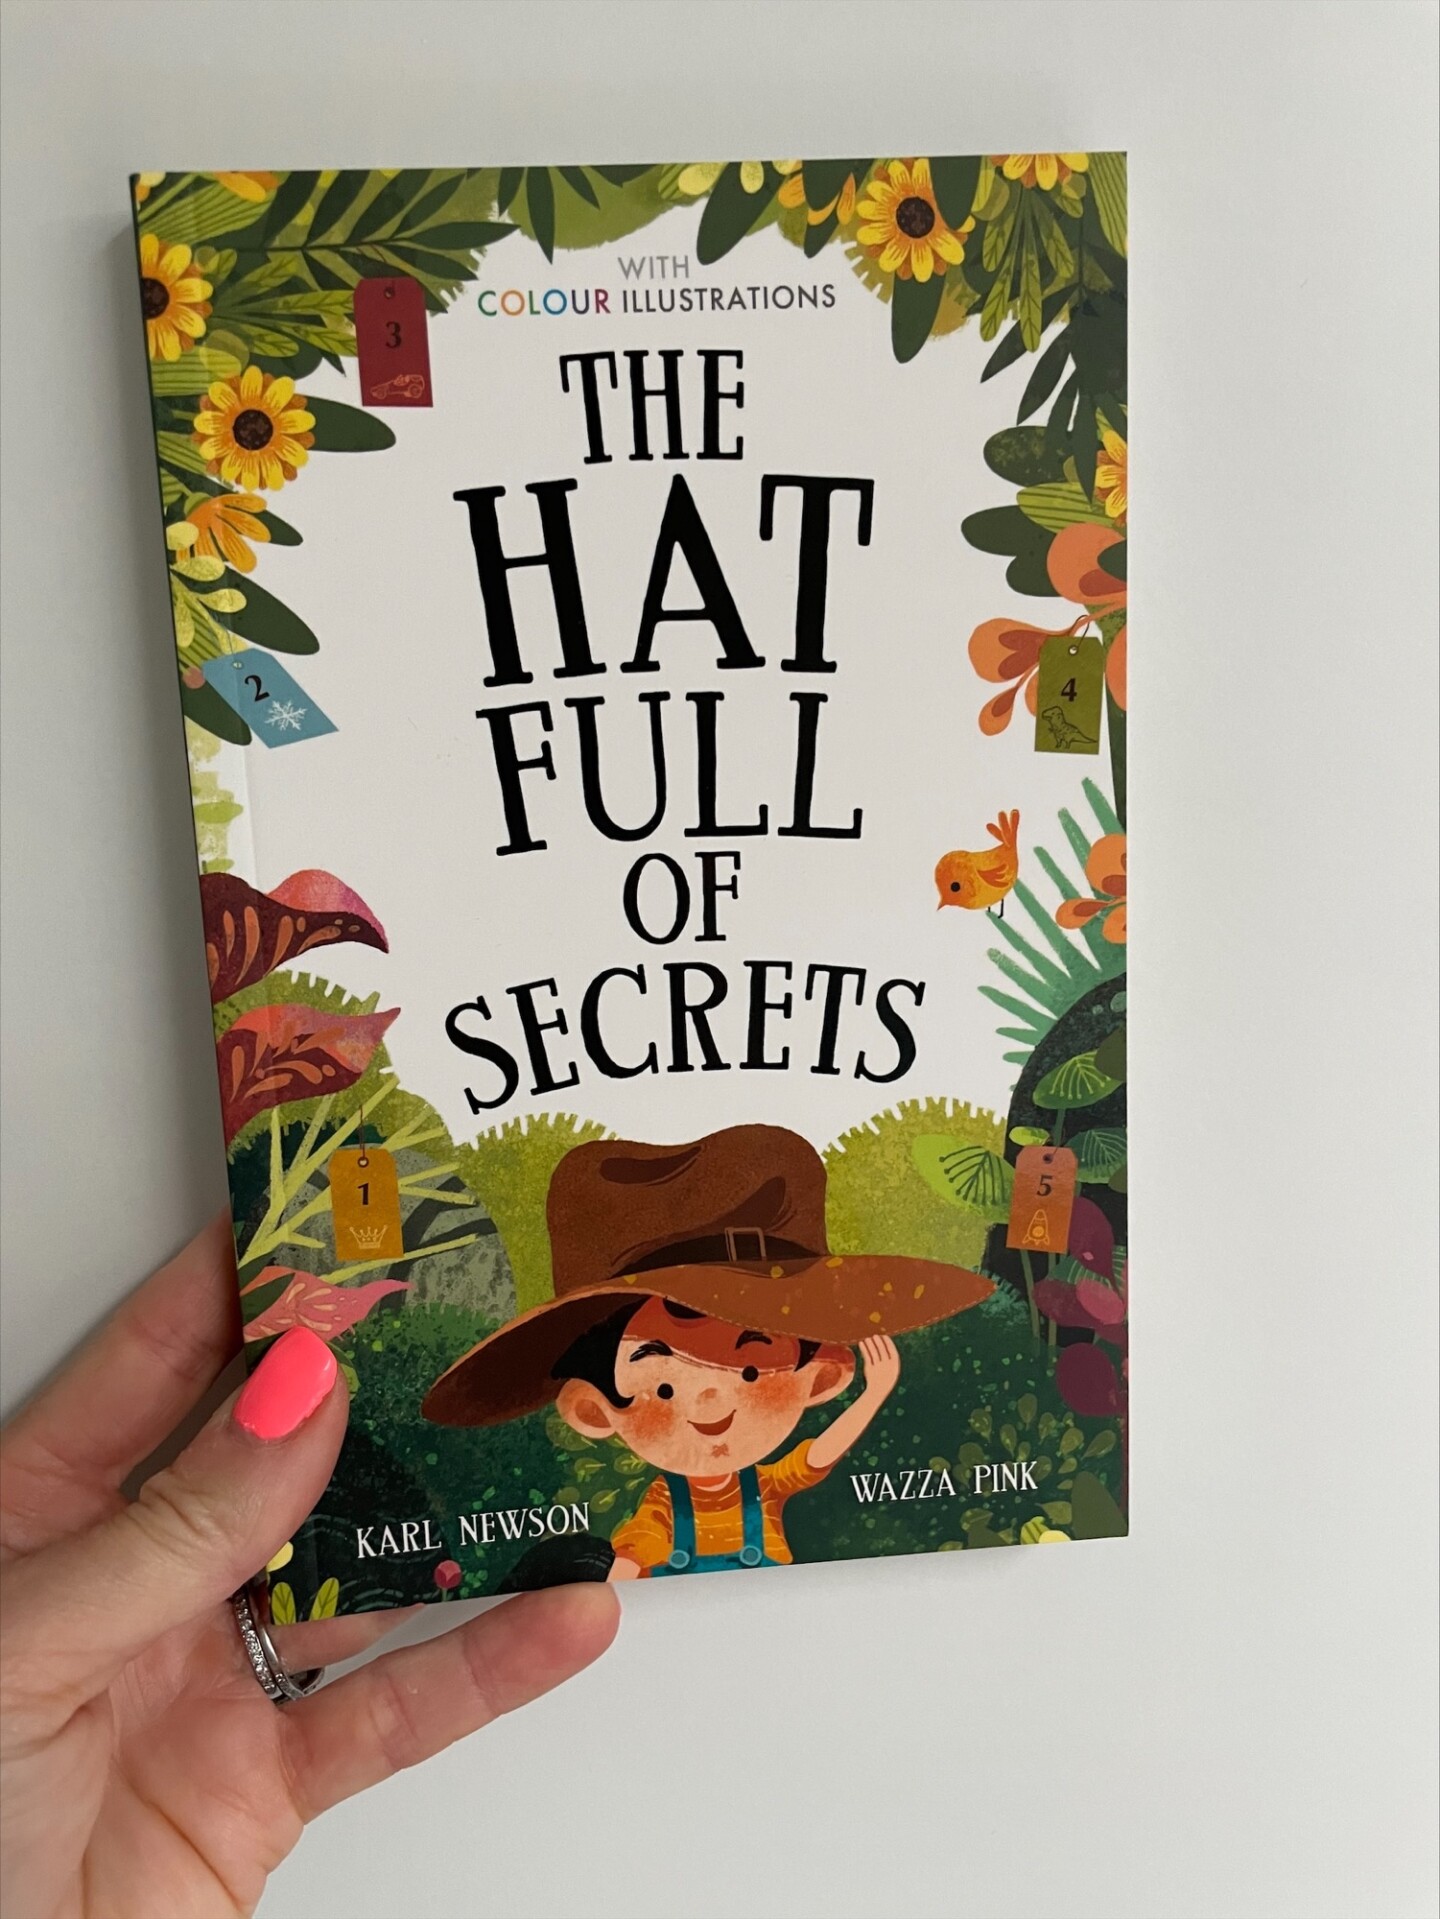 The Hat Full of Secrets